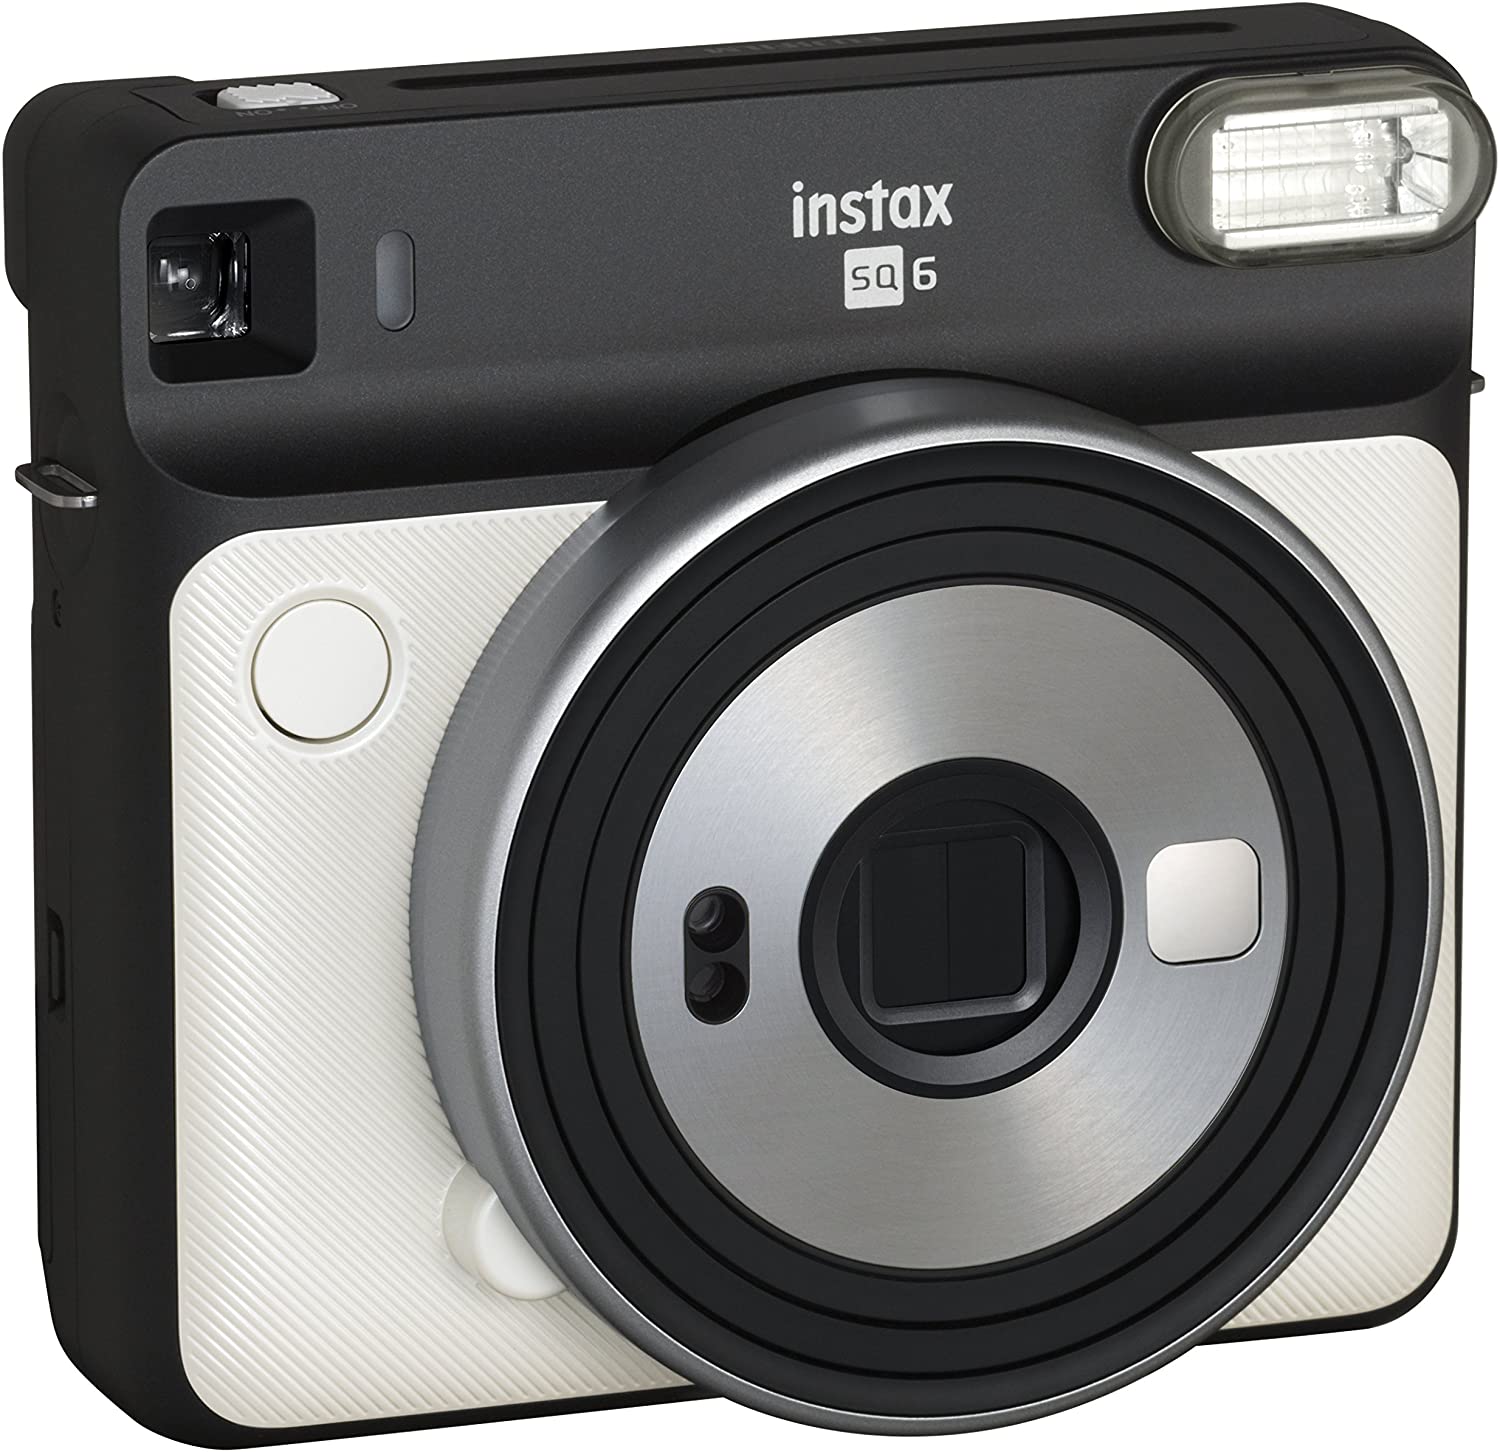 Fujifilm Instax Square SQ6 Instant Camera Package